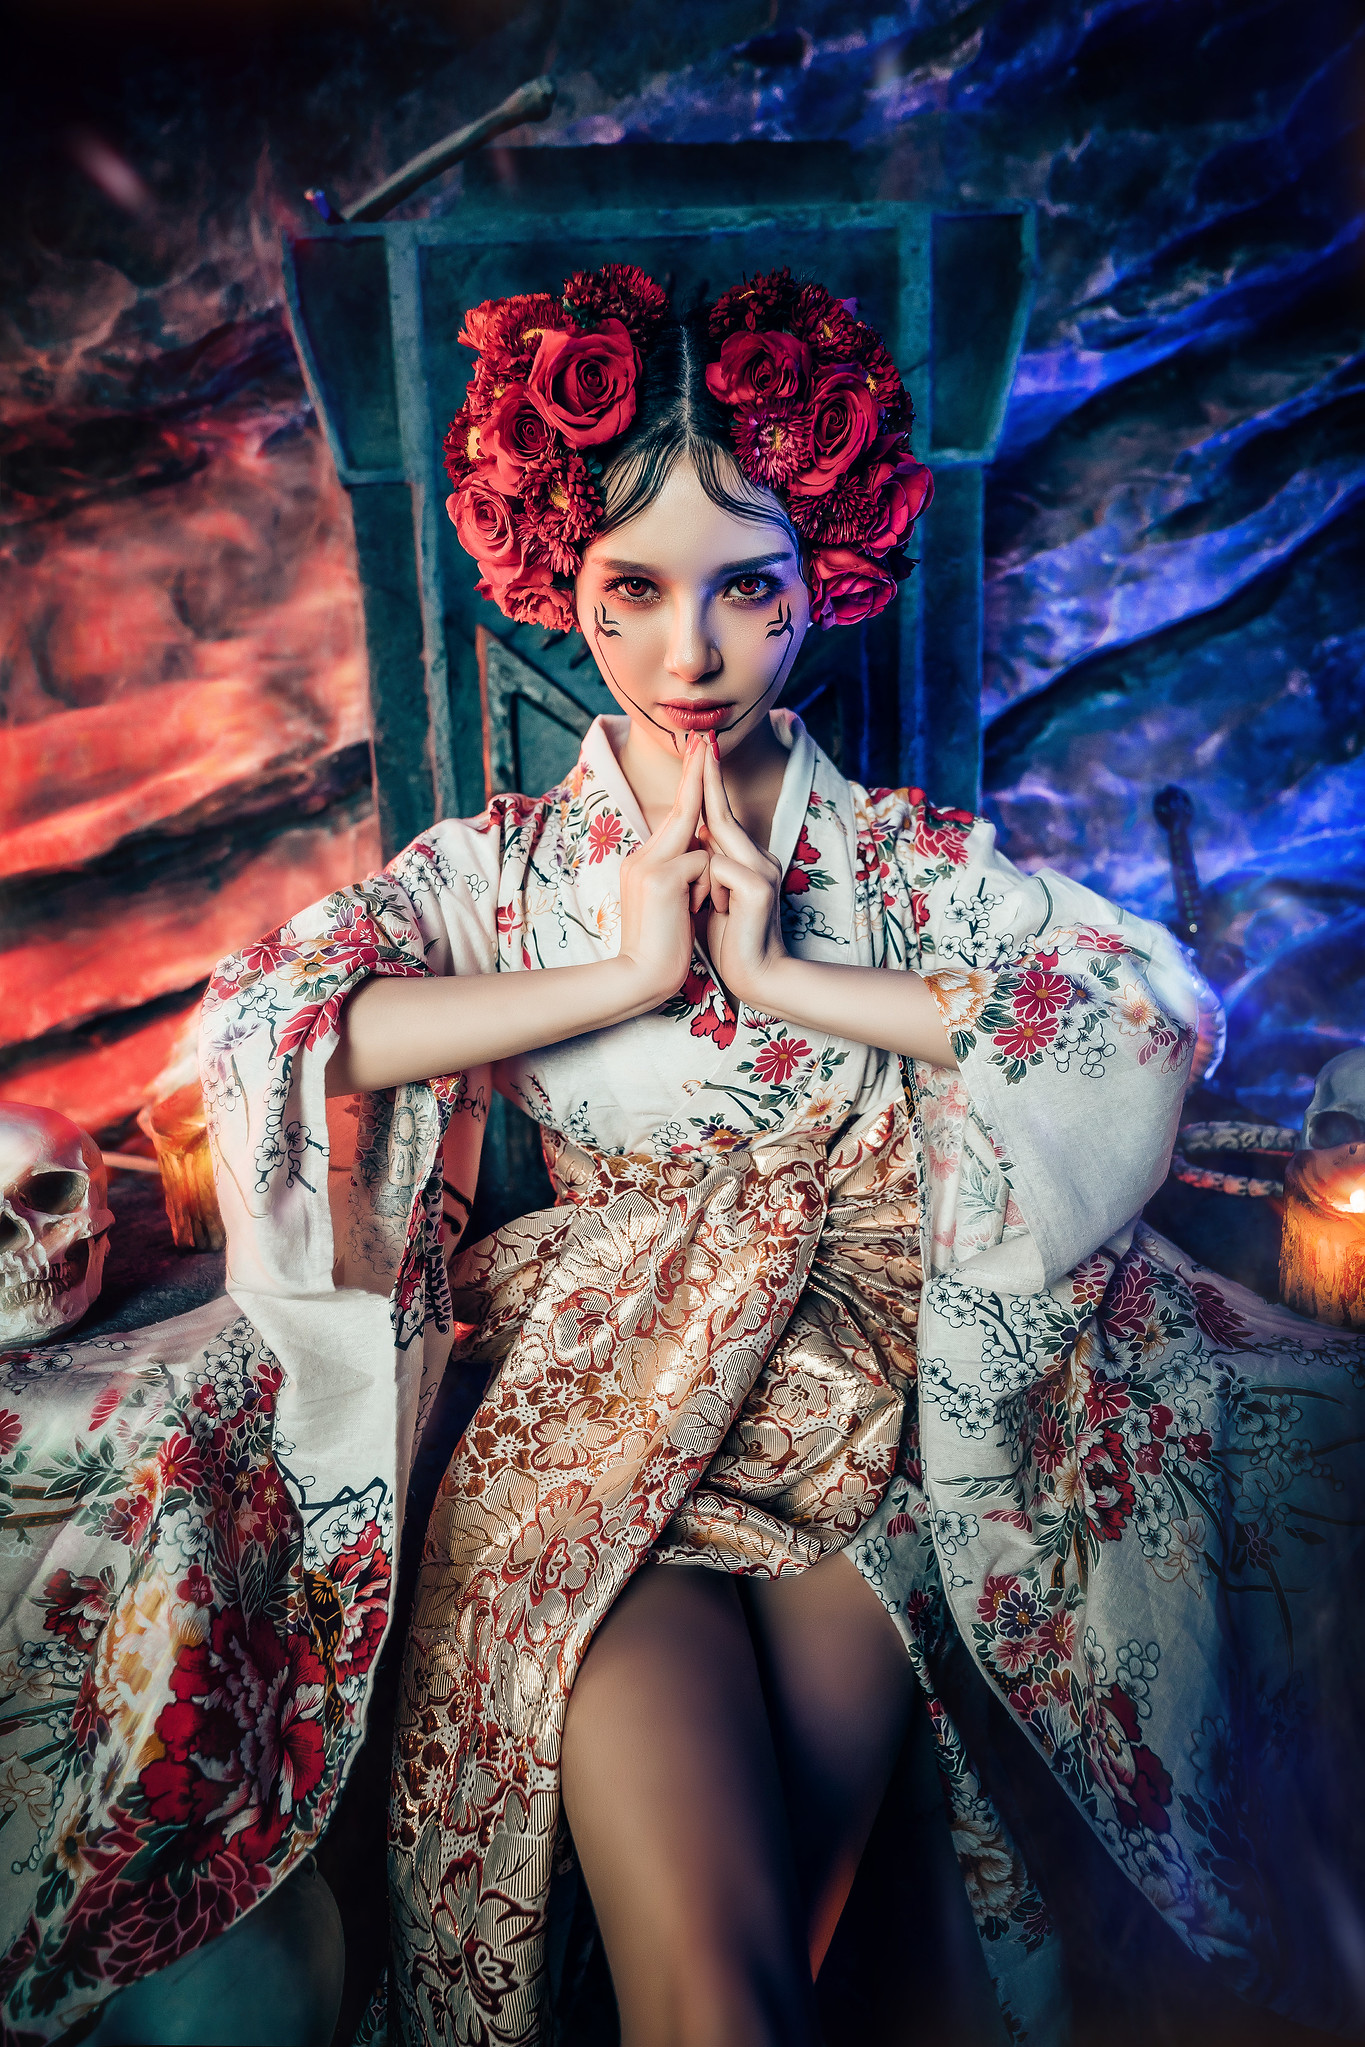 Asian Women Model Sitting Looking At Viewer Flower Crown Dark Hair Red Eyes Makeup Legs Red Lipstick 1365x2047